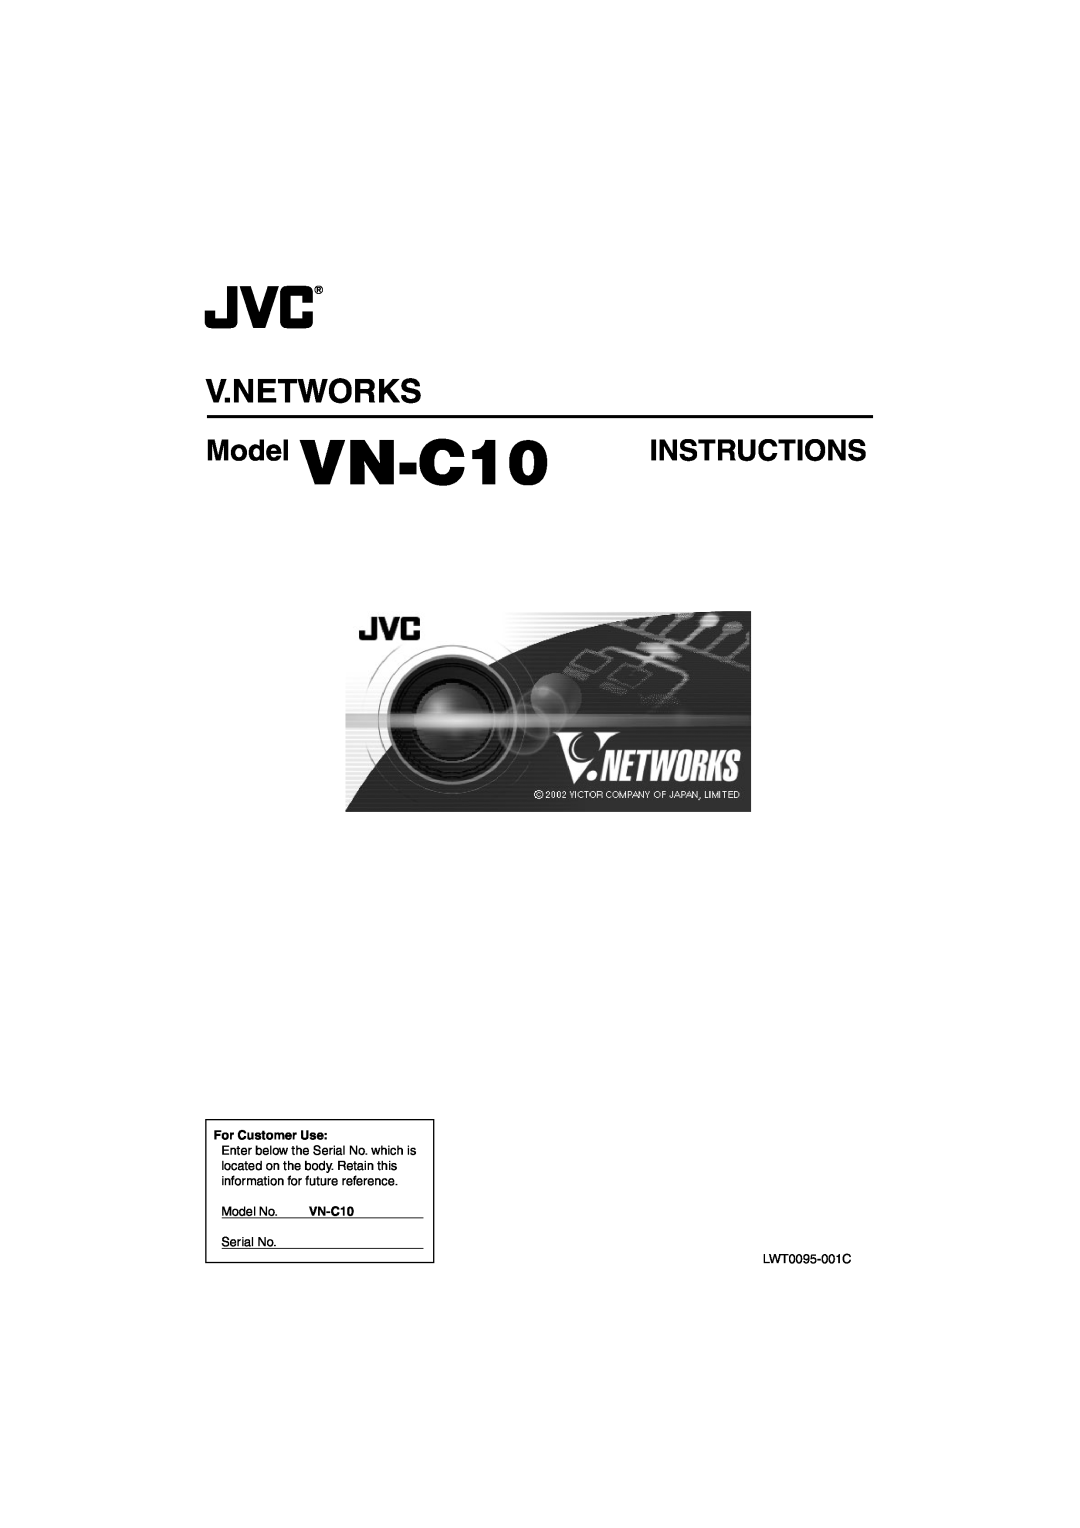 JVC manual V.Networks, Model VN-C10, Instructions, Serial No LWT0095-001C 